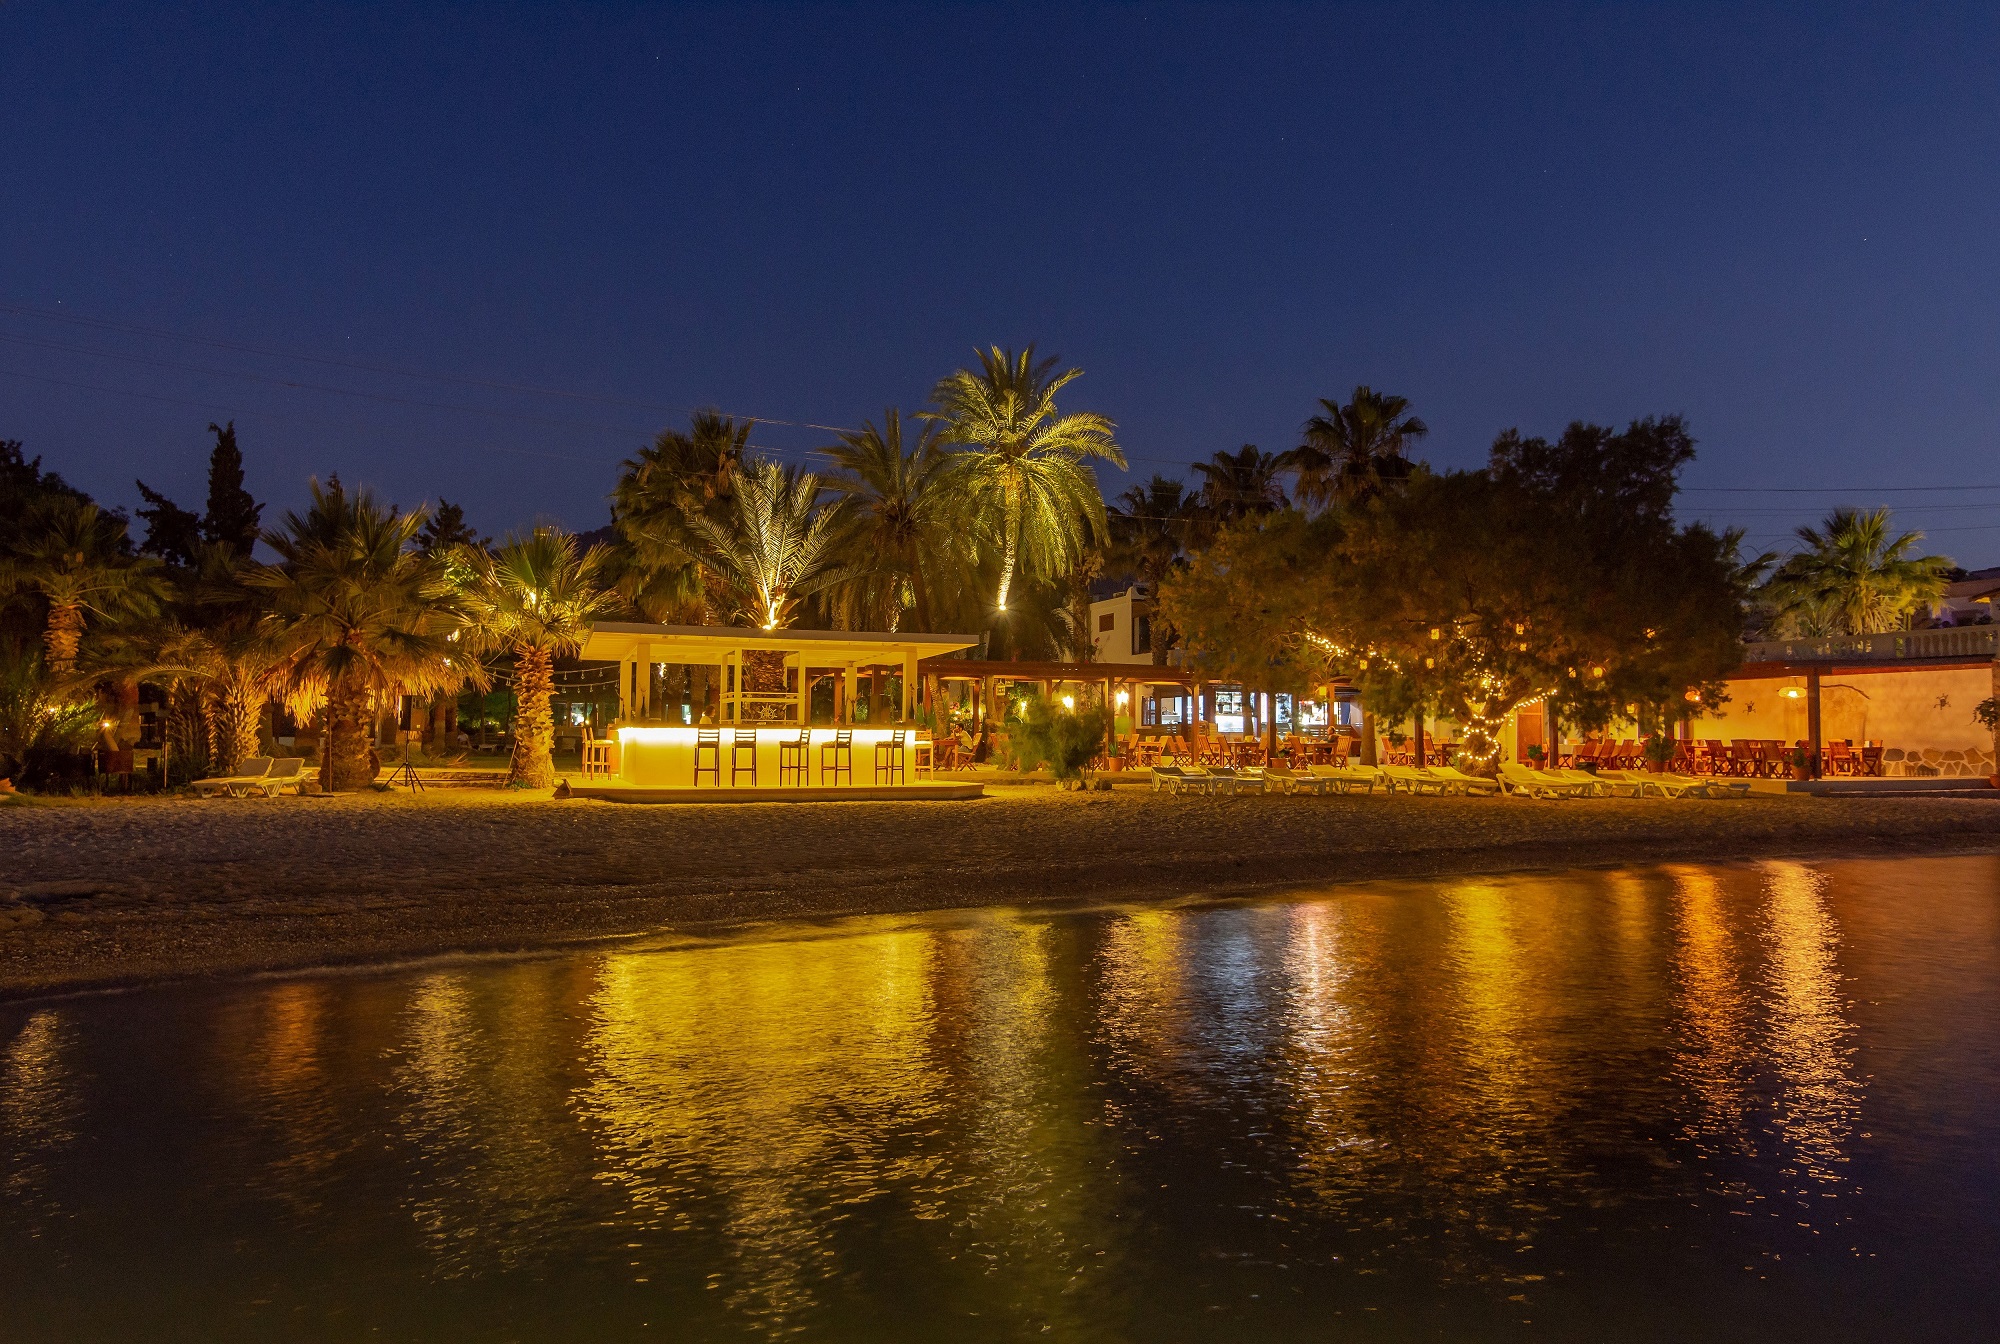 Selvi Beach Otel (Selvi Beach Hotel)